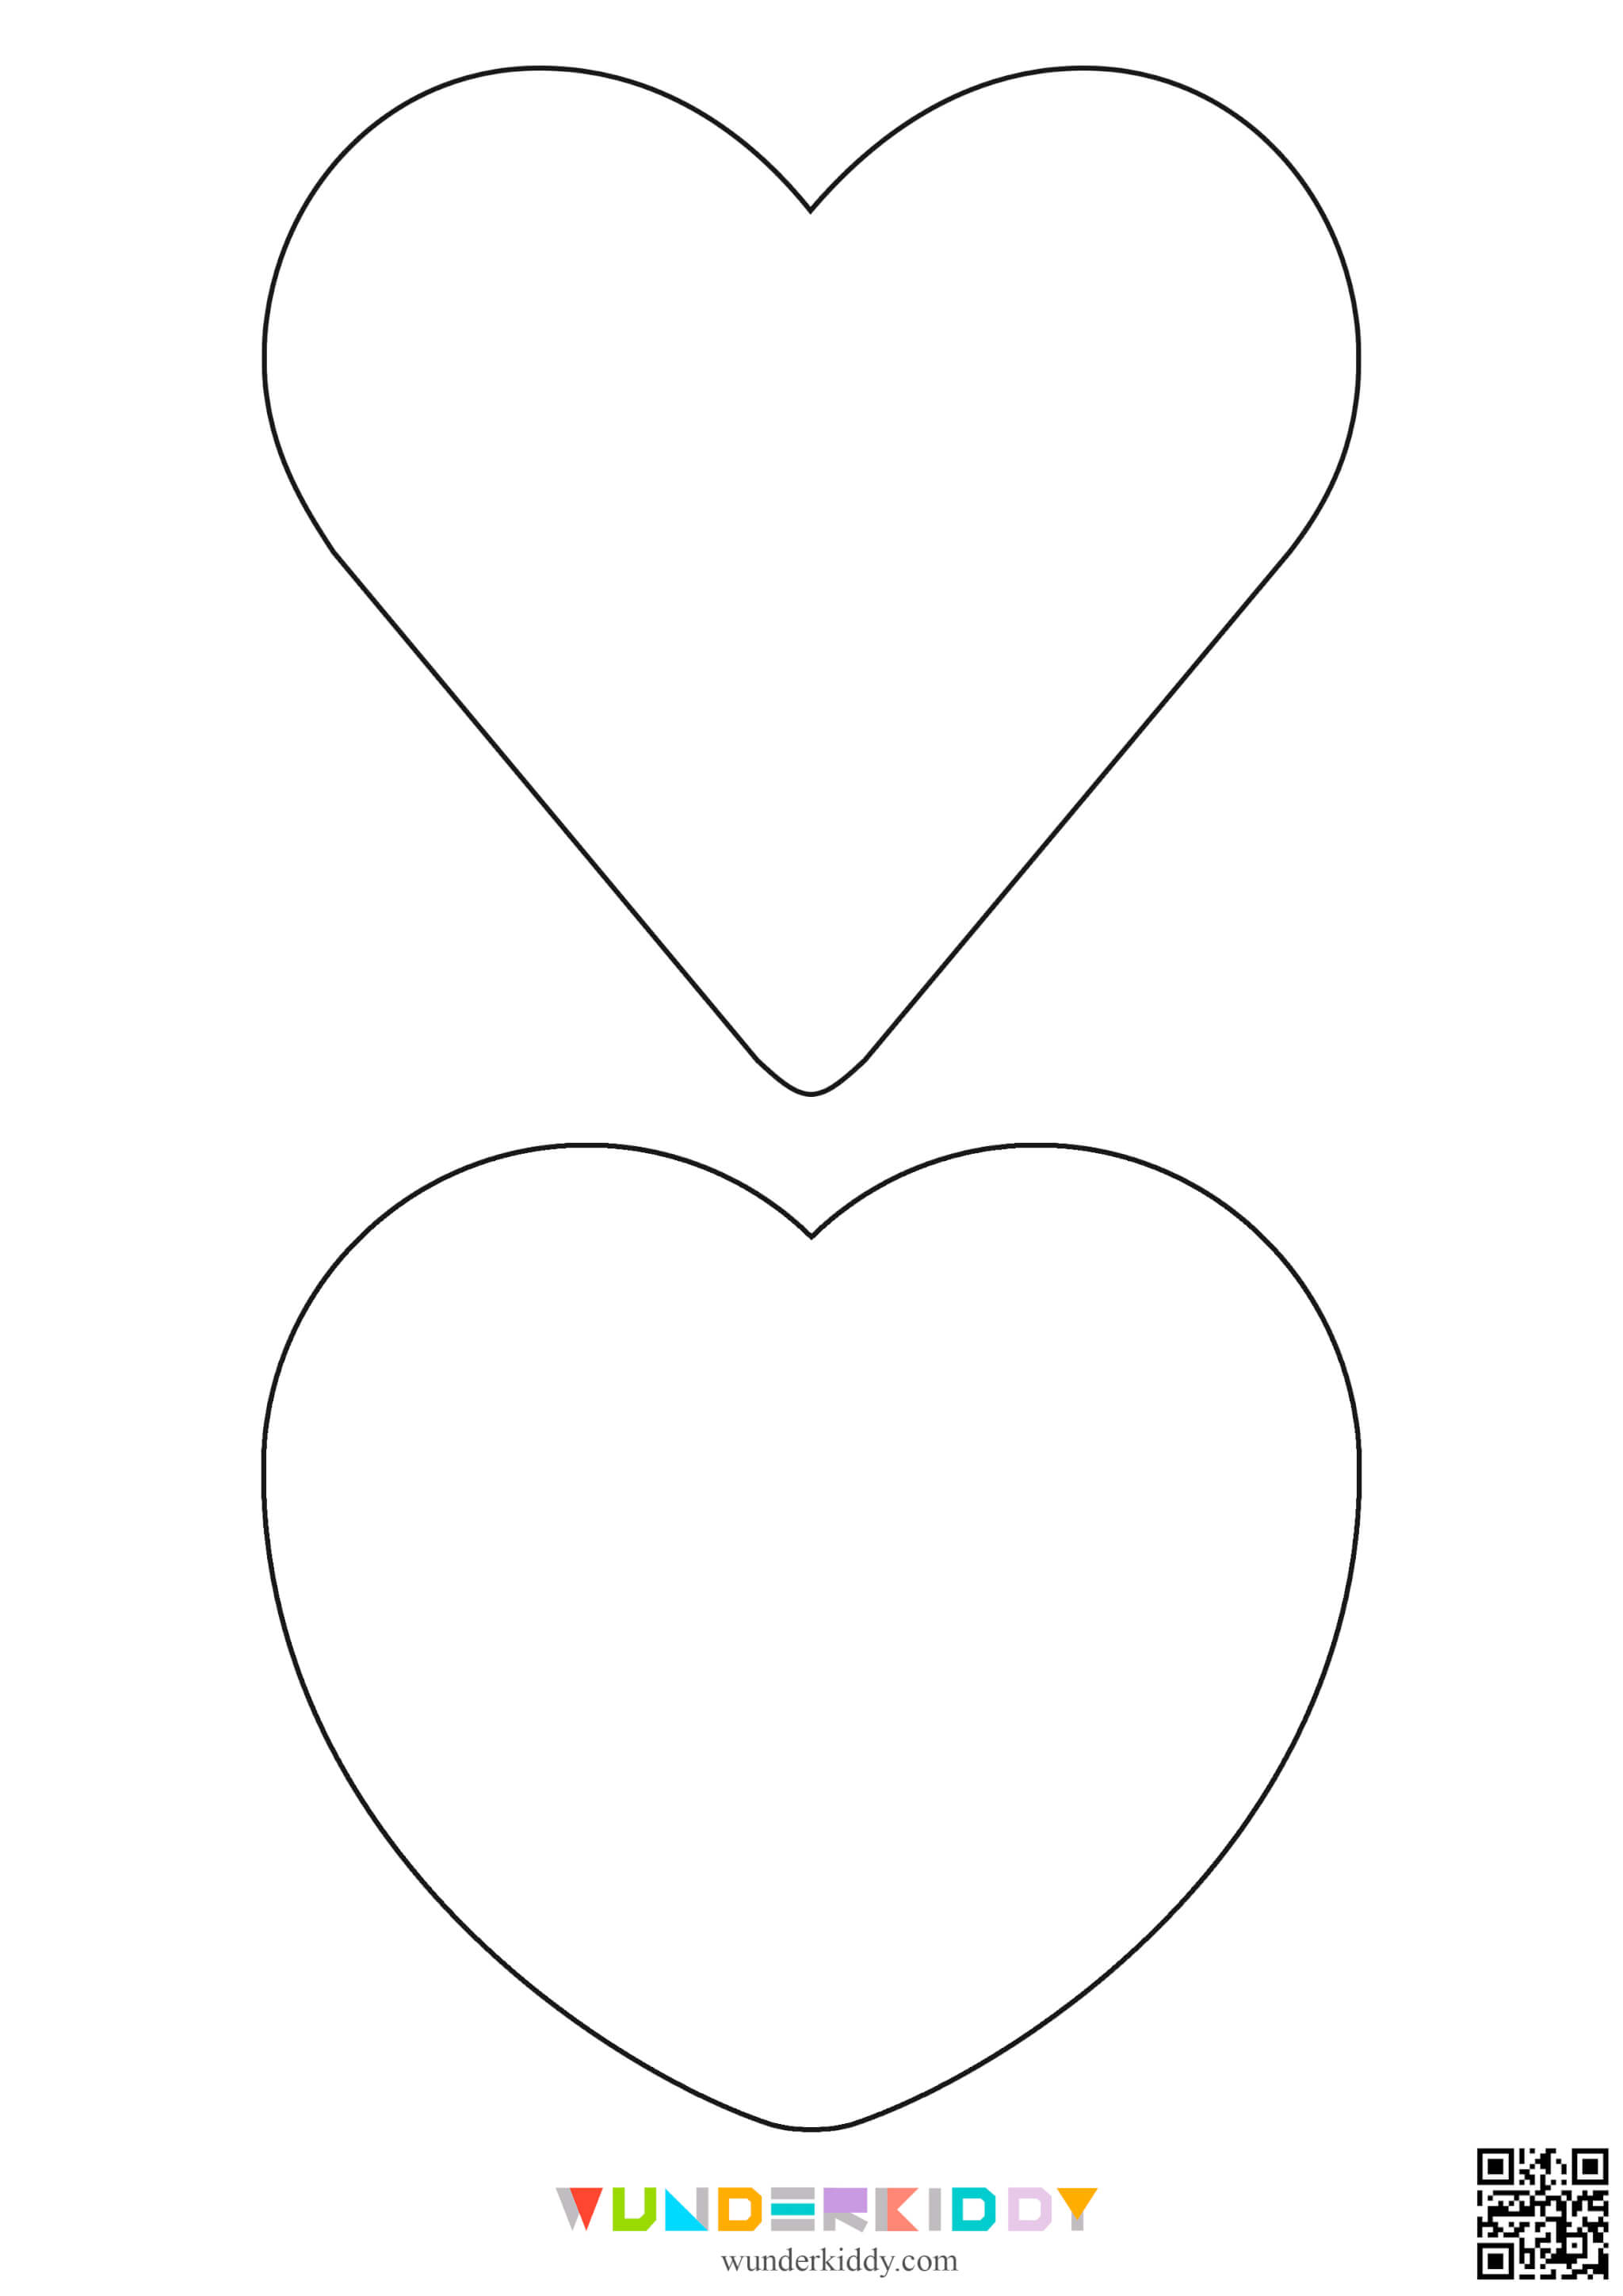 Heart Template Printable - Image 2